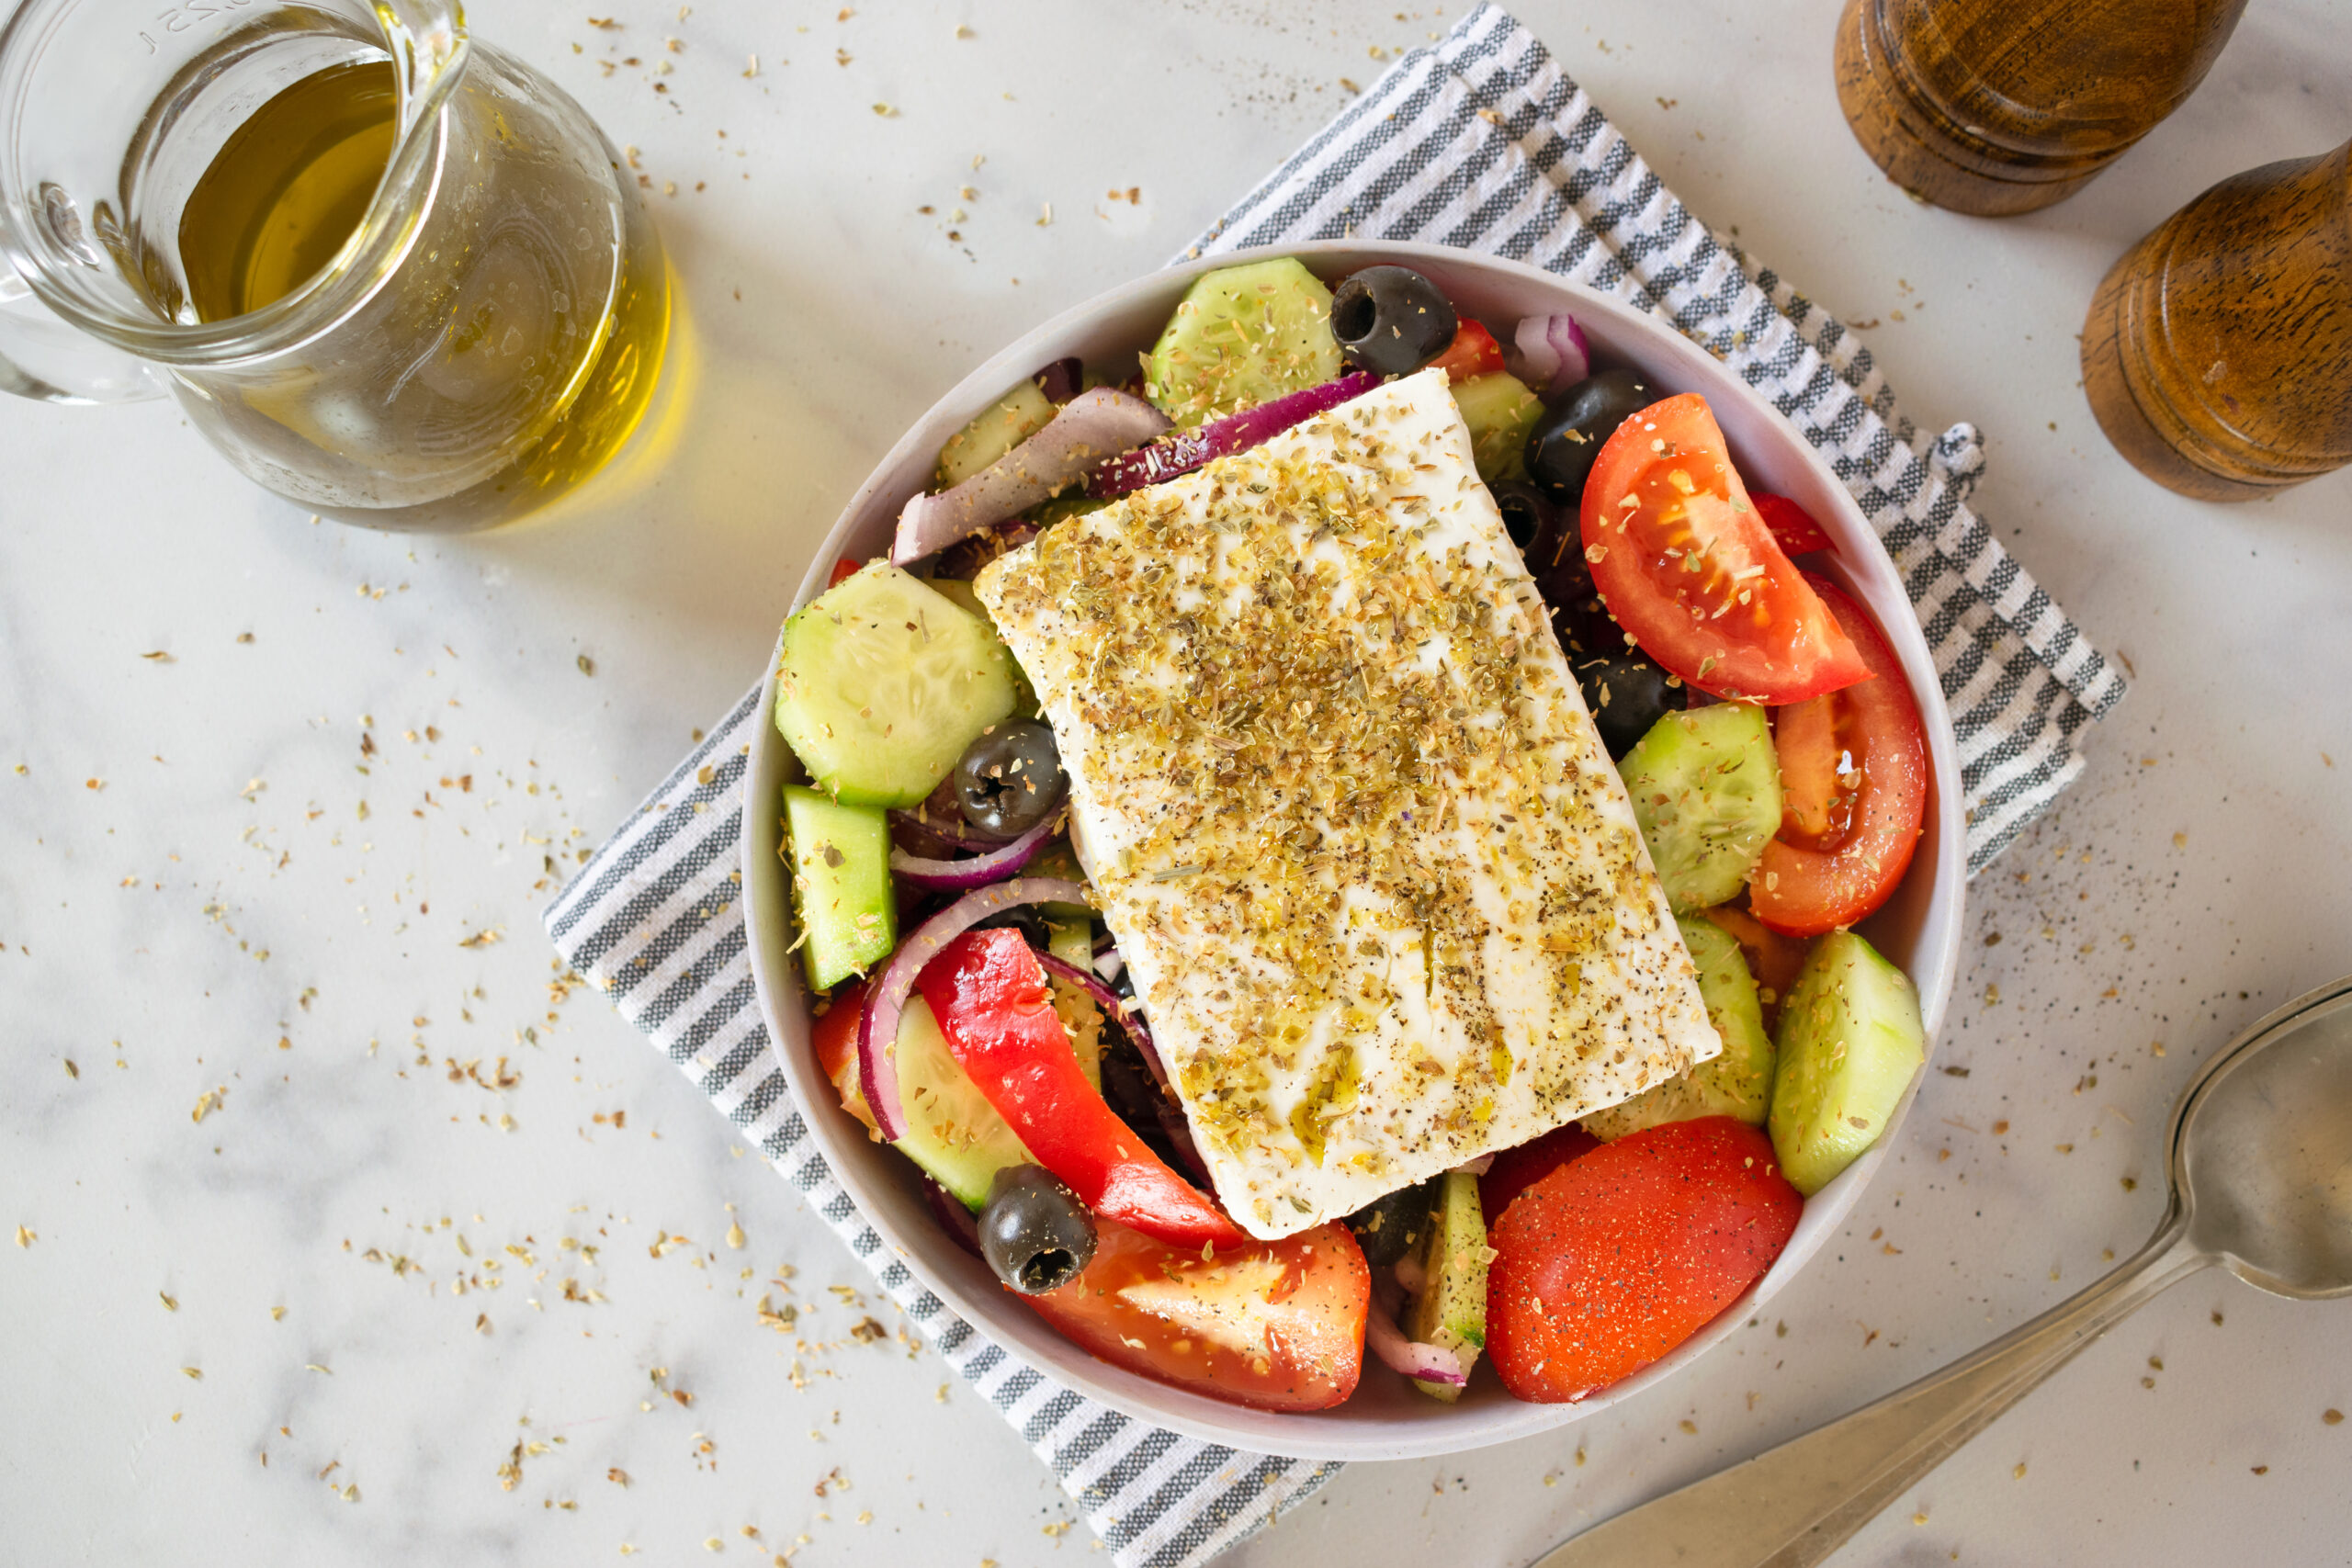 https://www.mediterraneanliving.com/wp-content/uploads/2018/02/Authentic-Greek-Salad-3-scaled.jpg